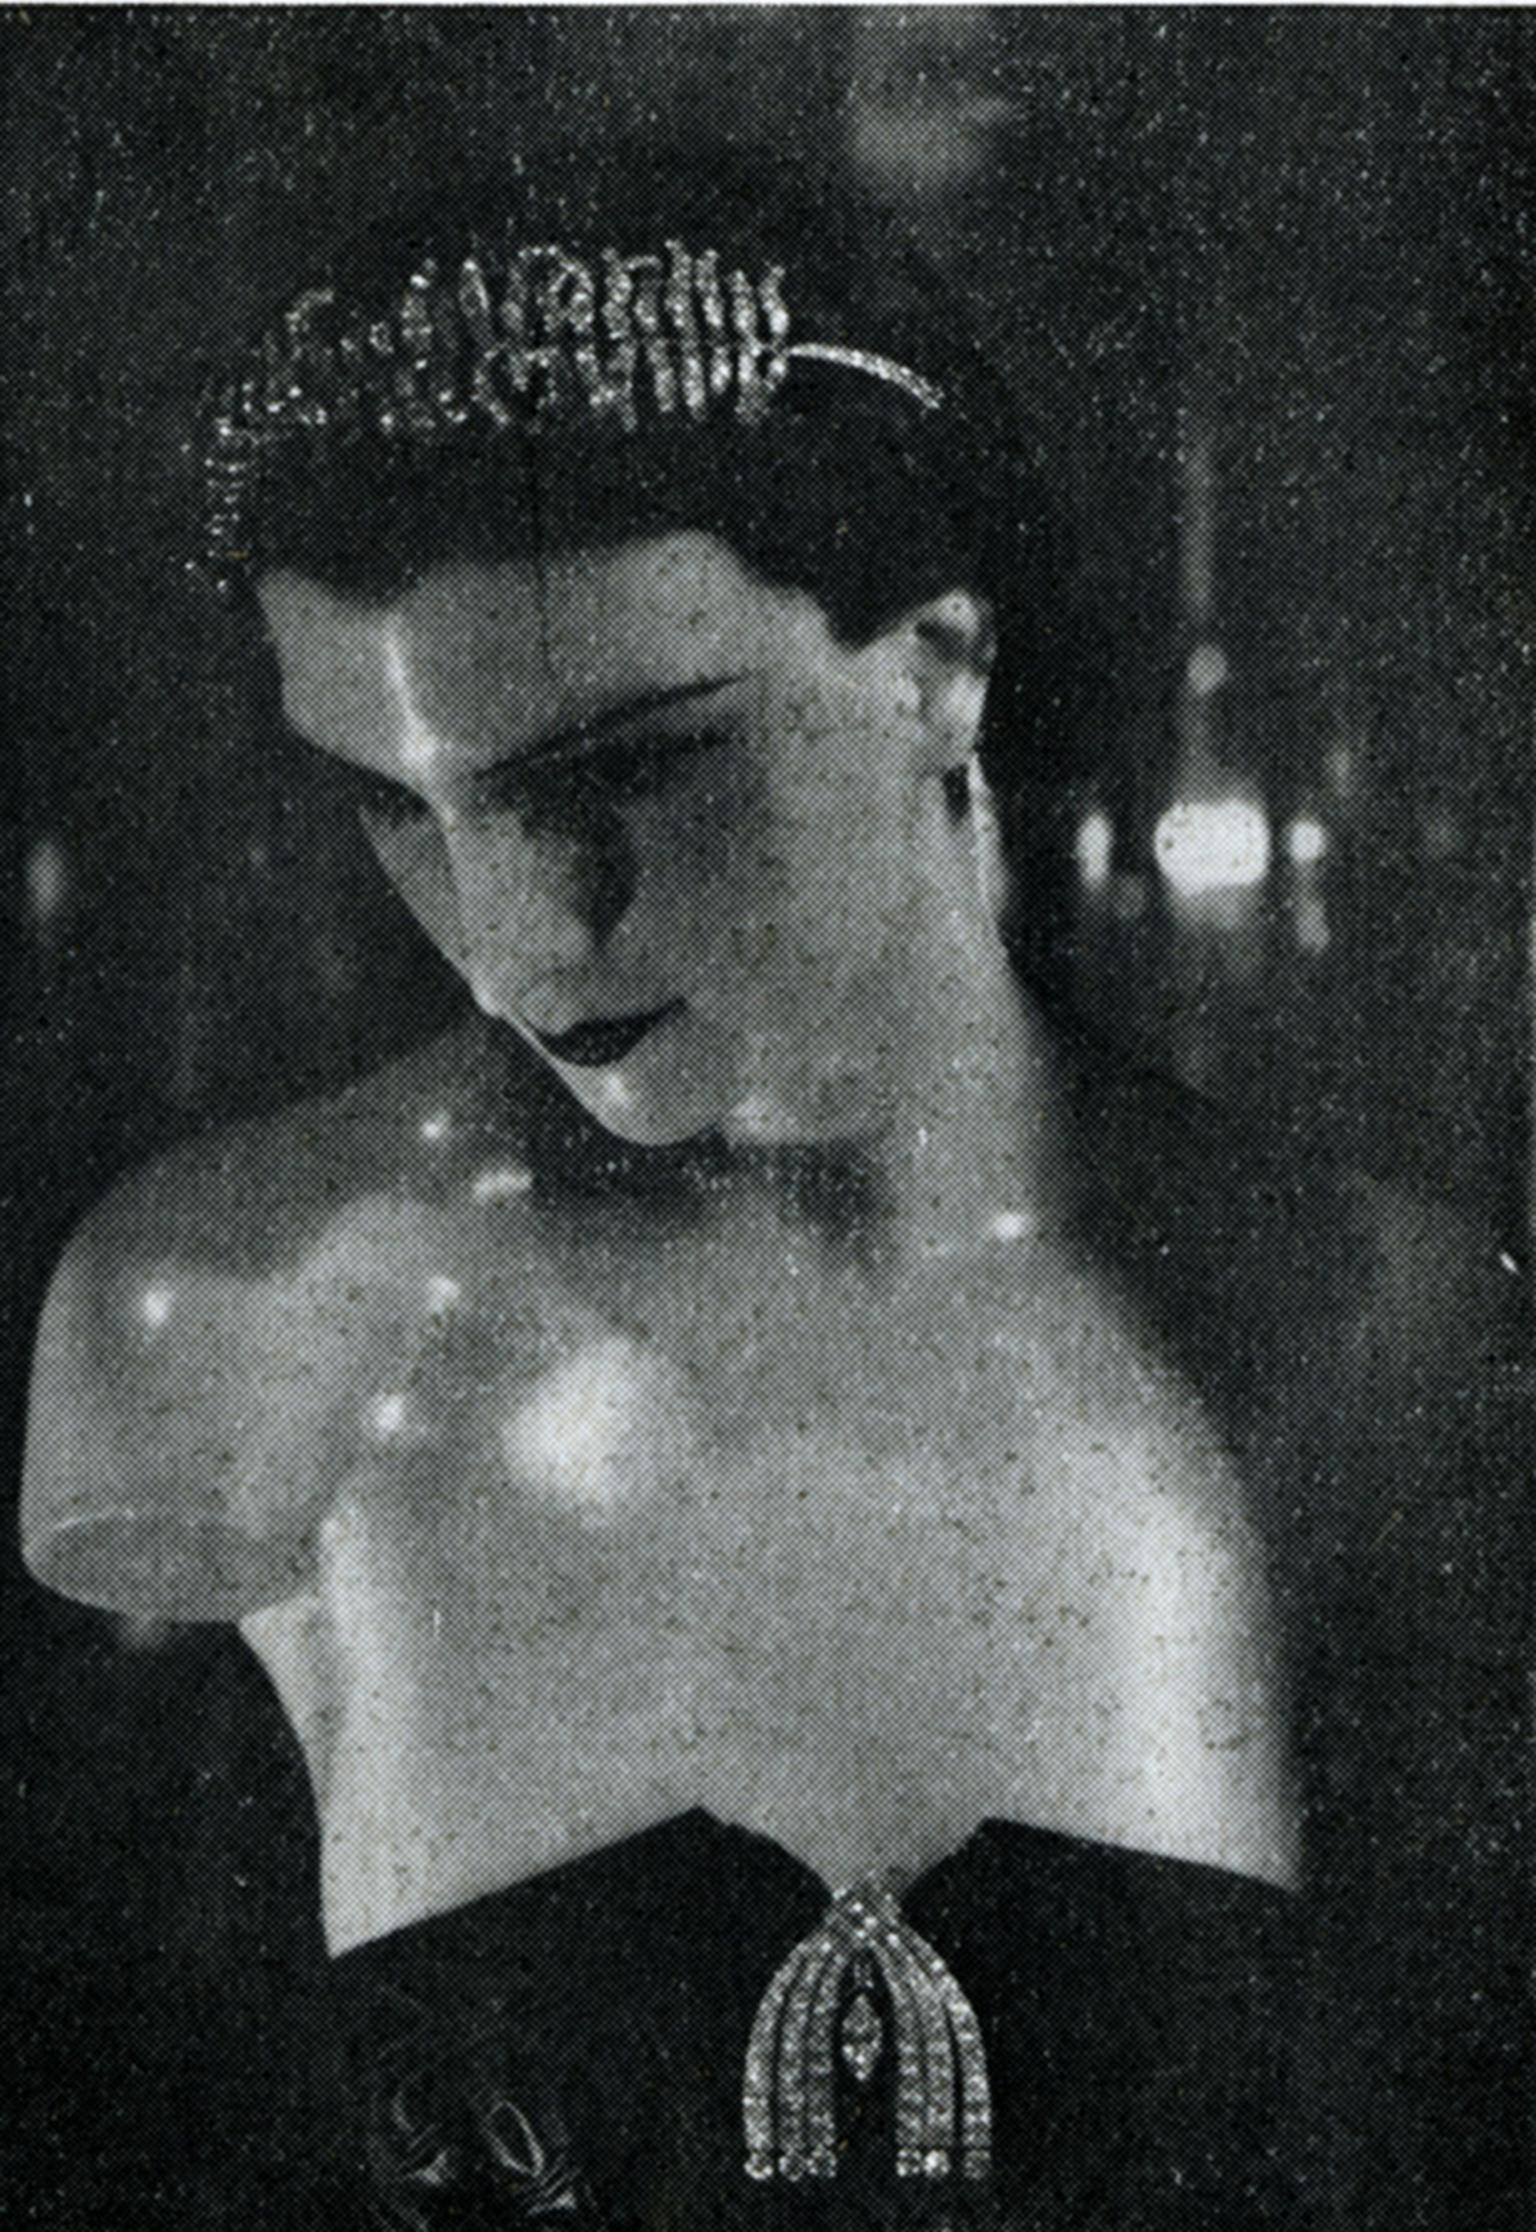 Mademoiselle Chanel's 1932 Bijoux de diamants exhibition showed the feather brooch on model's head